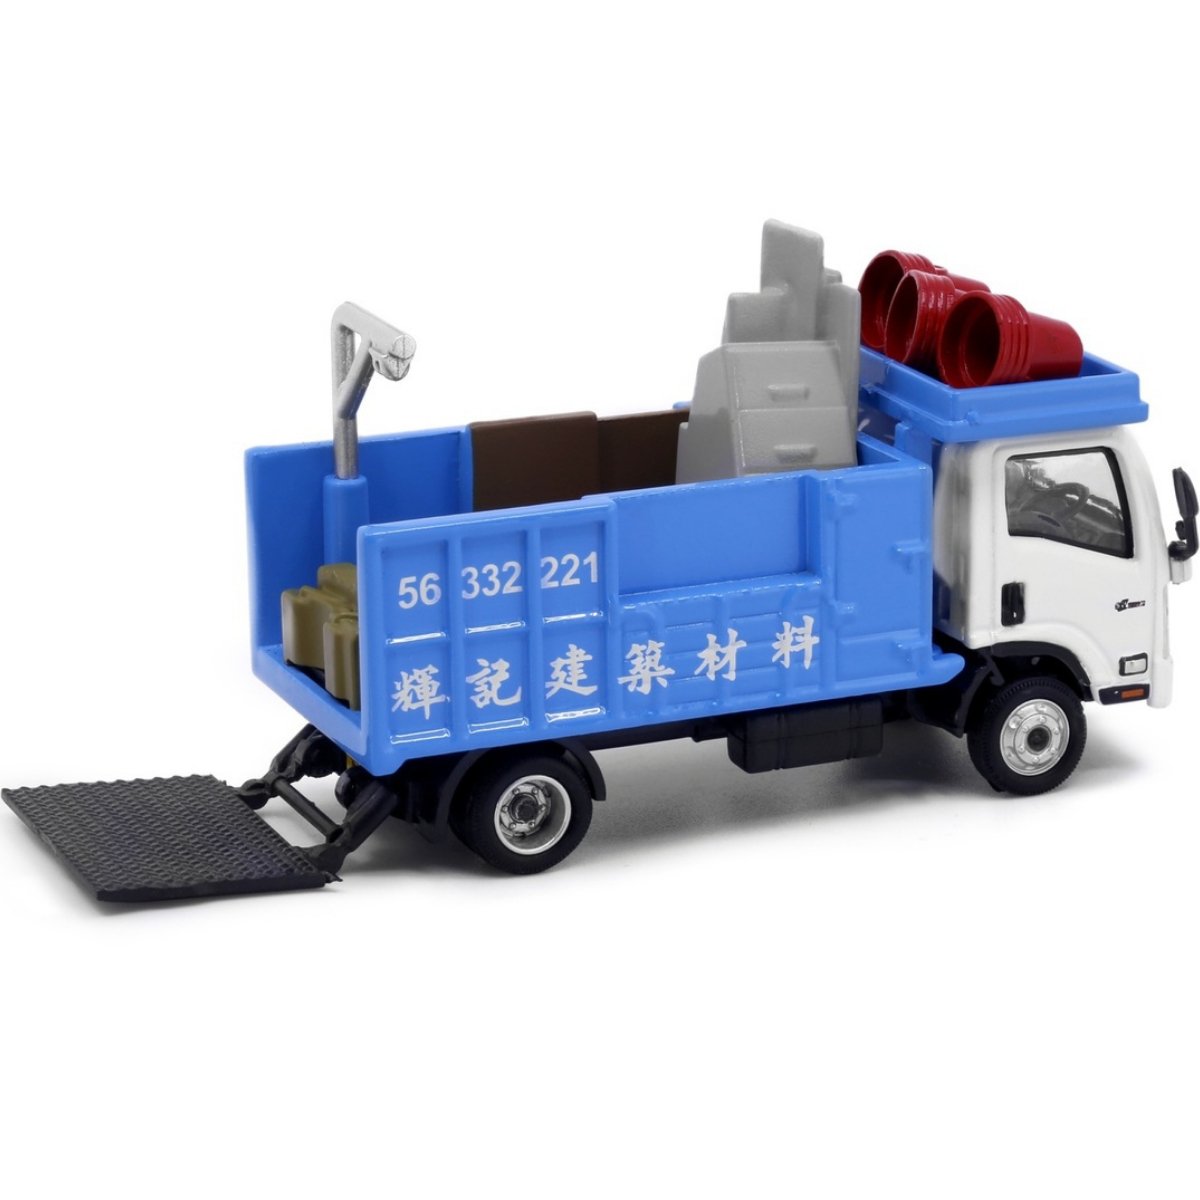 Tiny Models Isuzu N Series Demolition Truck (1:76 Scale) - Phillips Hobbies